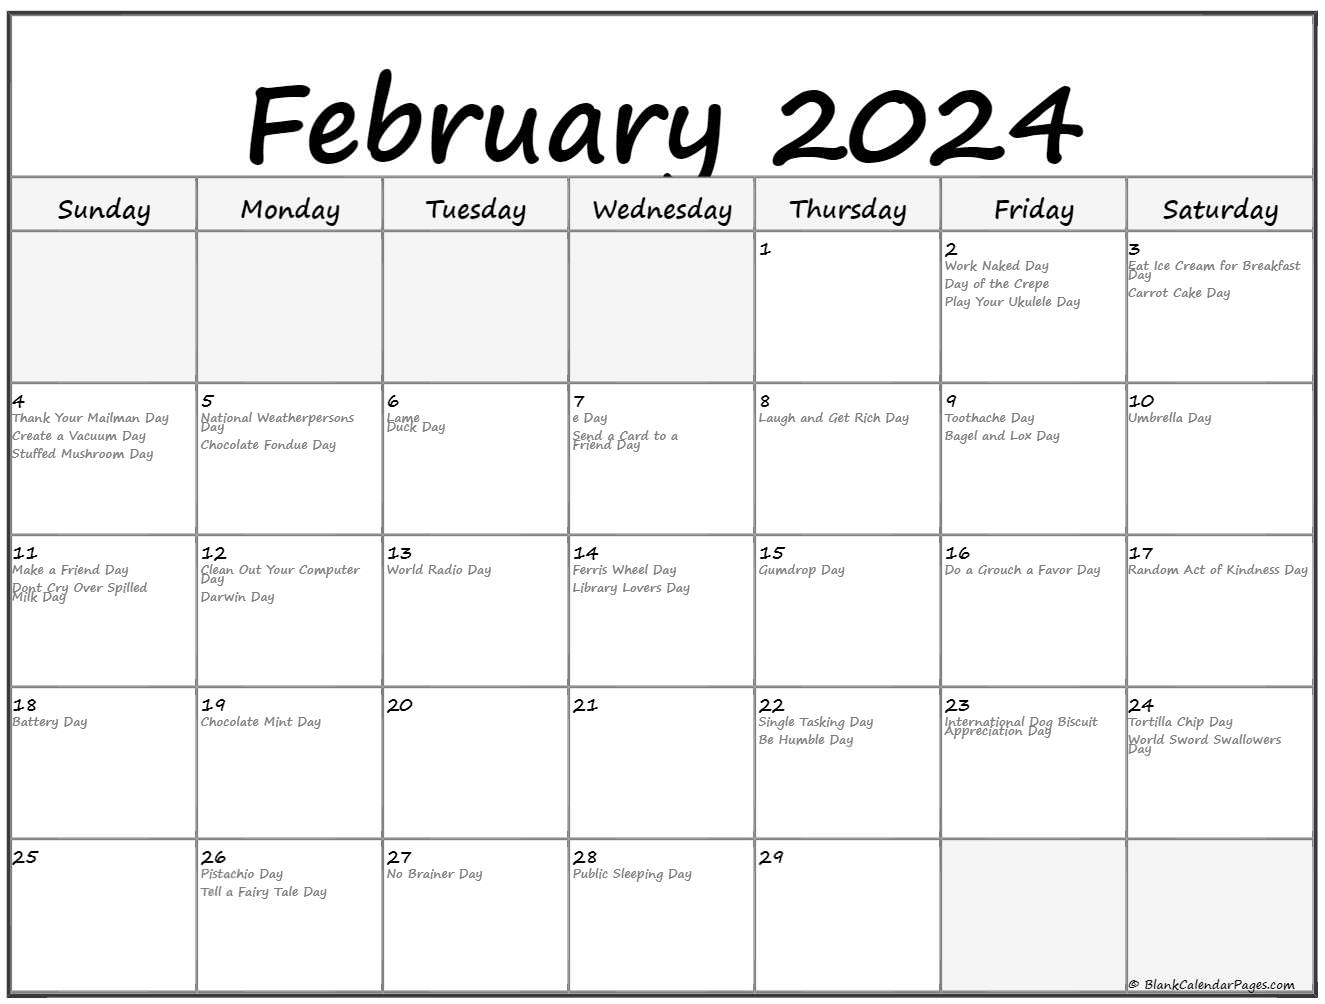 February 2024 Holidays And Observances Dennie Phillis